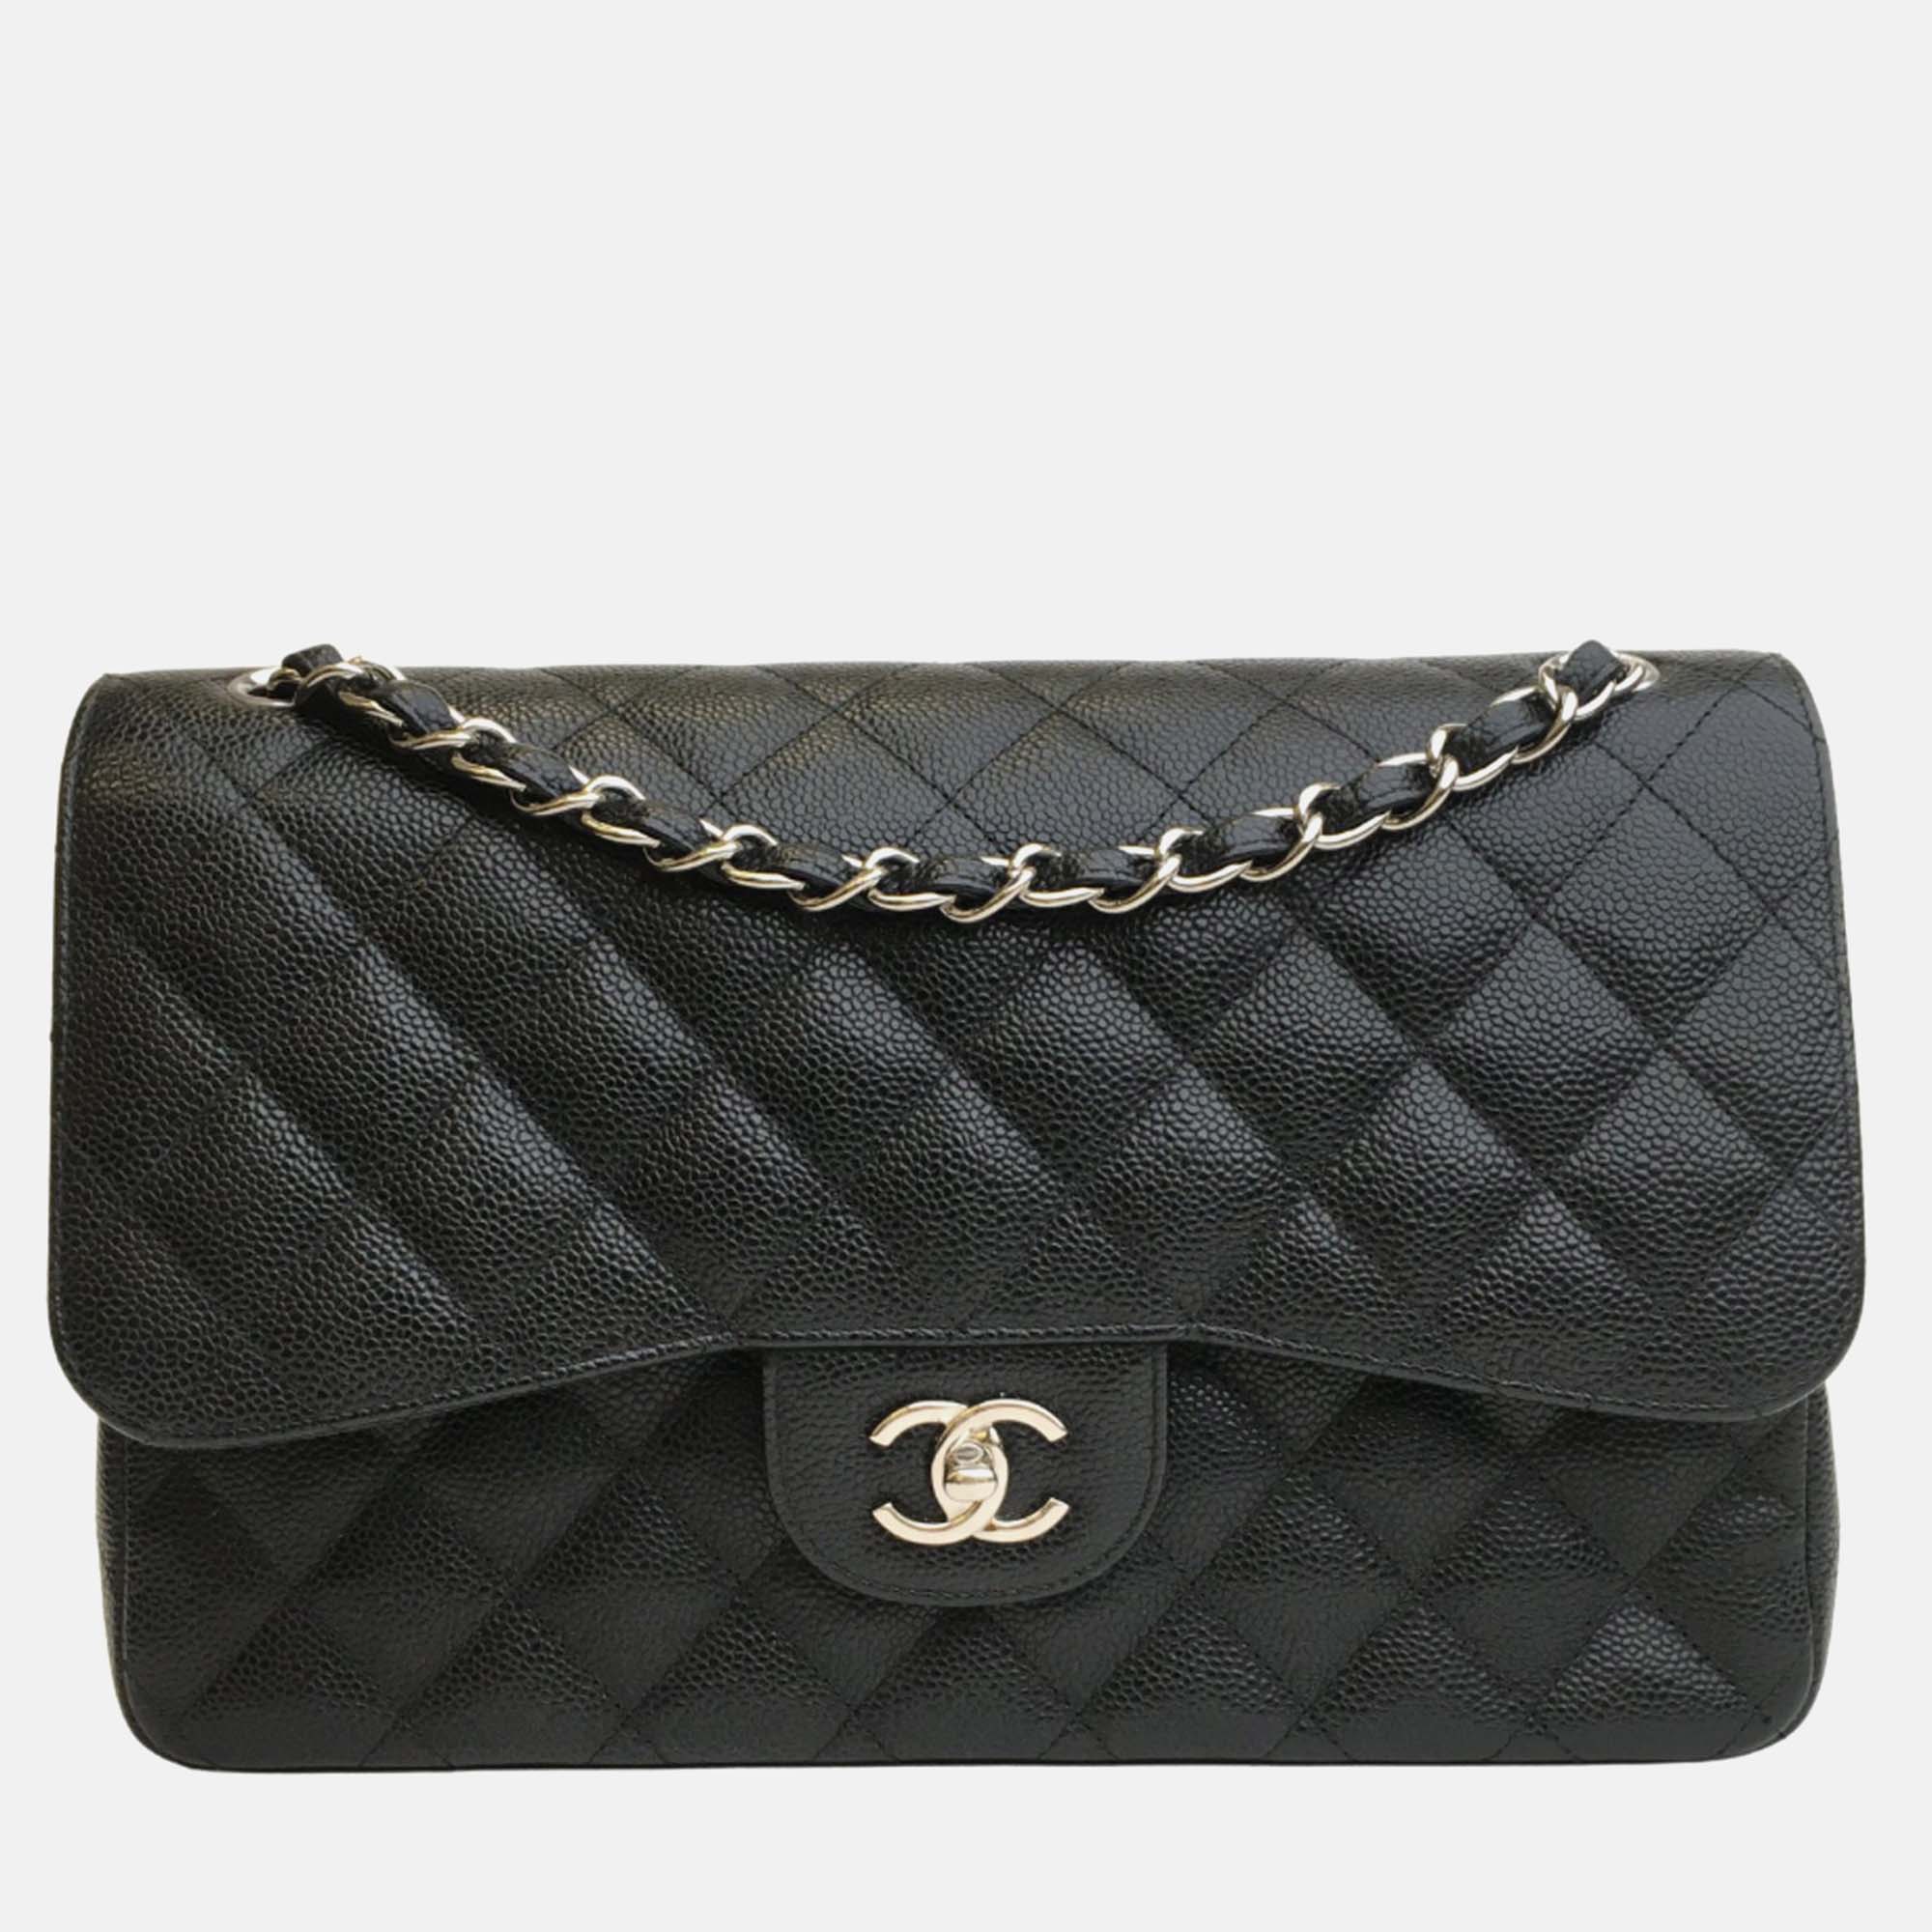 Chanel black caviar leather jumbo classic double flap shoulder bag